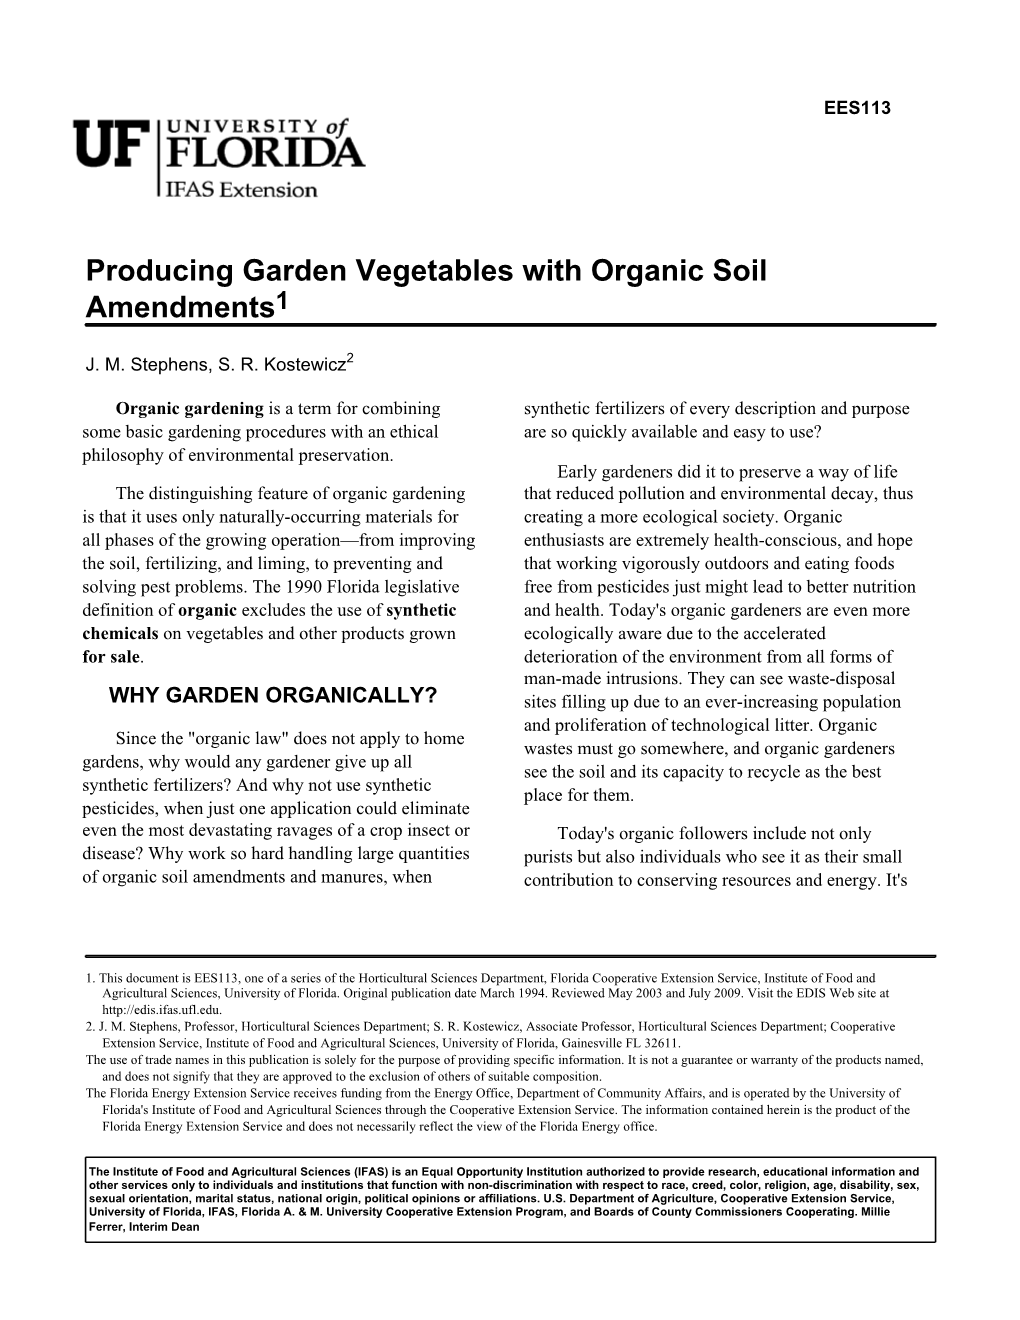 Producing Garden Vegetables with Organic Soil Amendments1